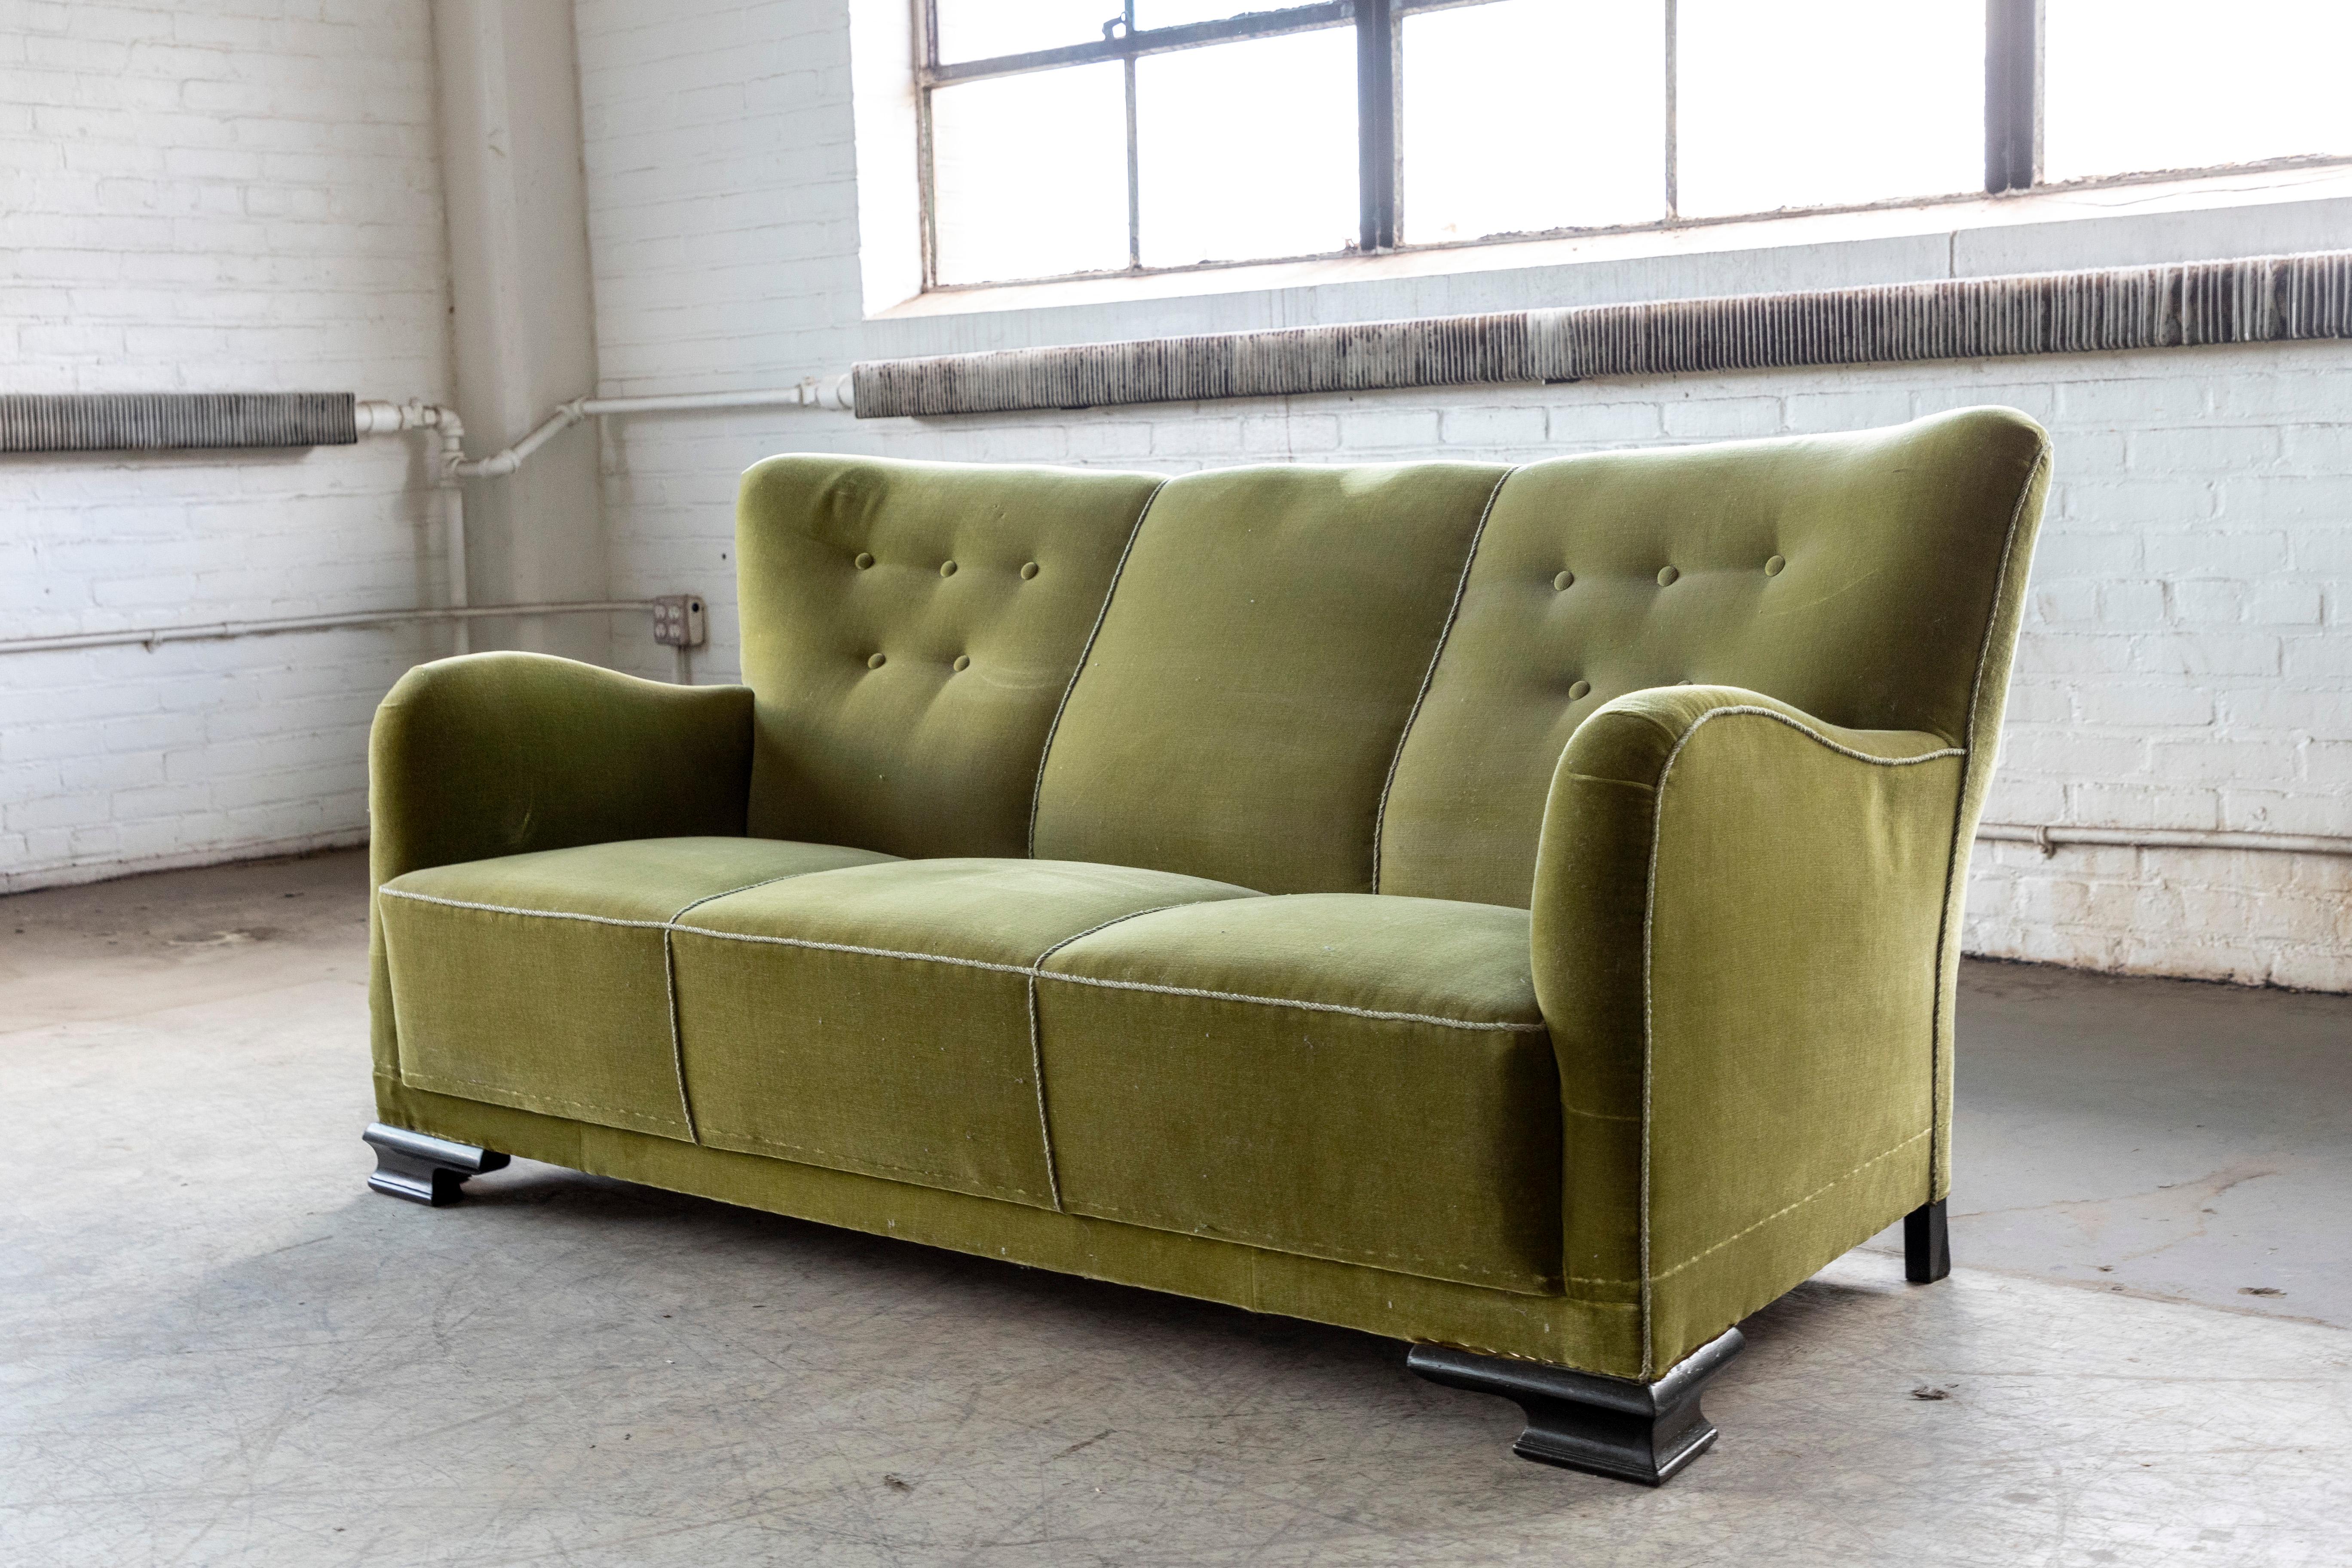 Danish Midcentury Sofa in Green Mohair with Art Deco Legs 1